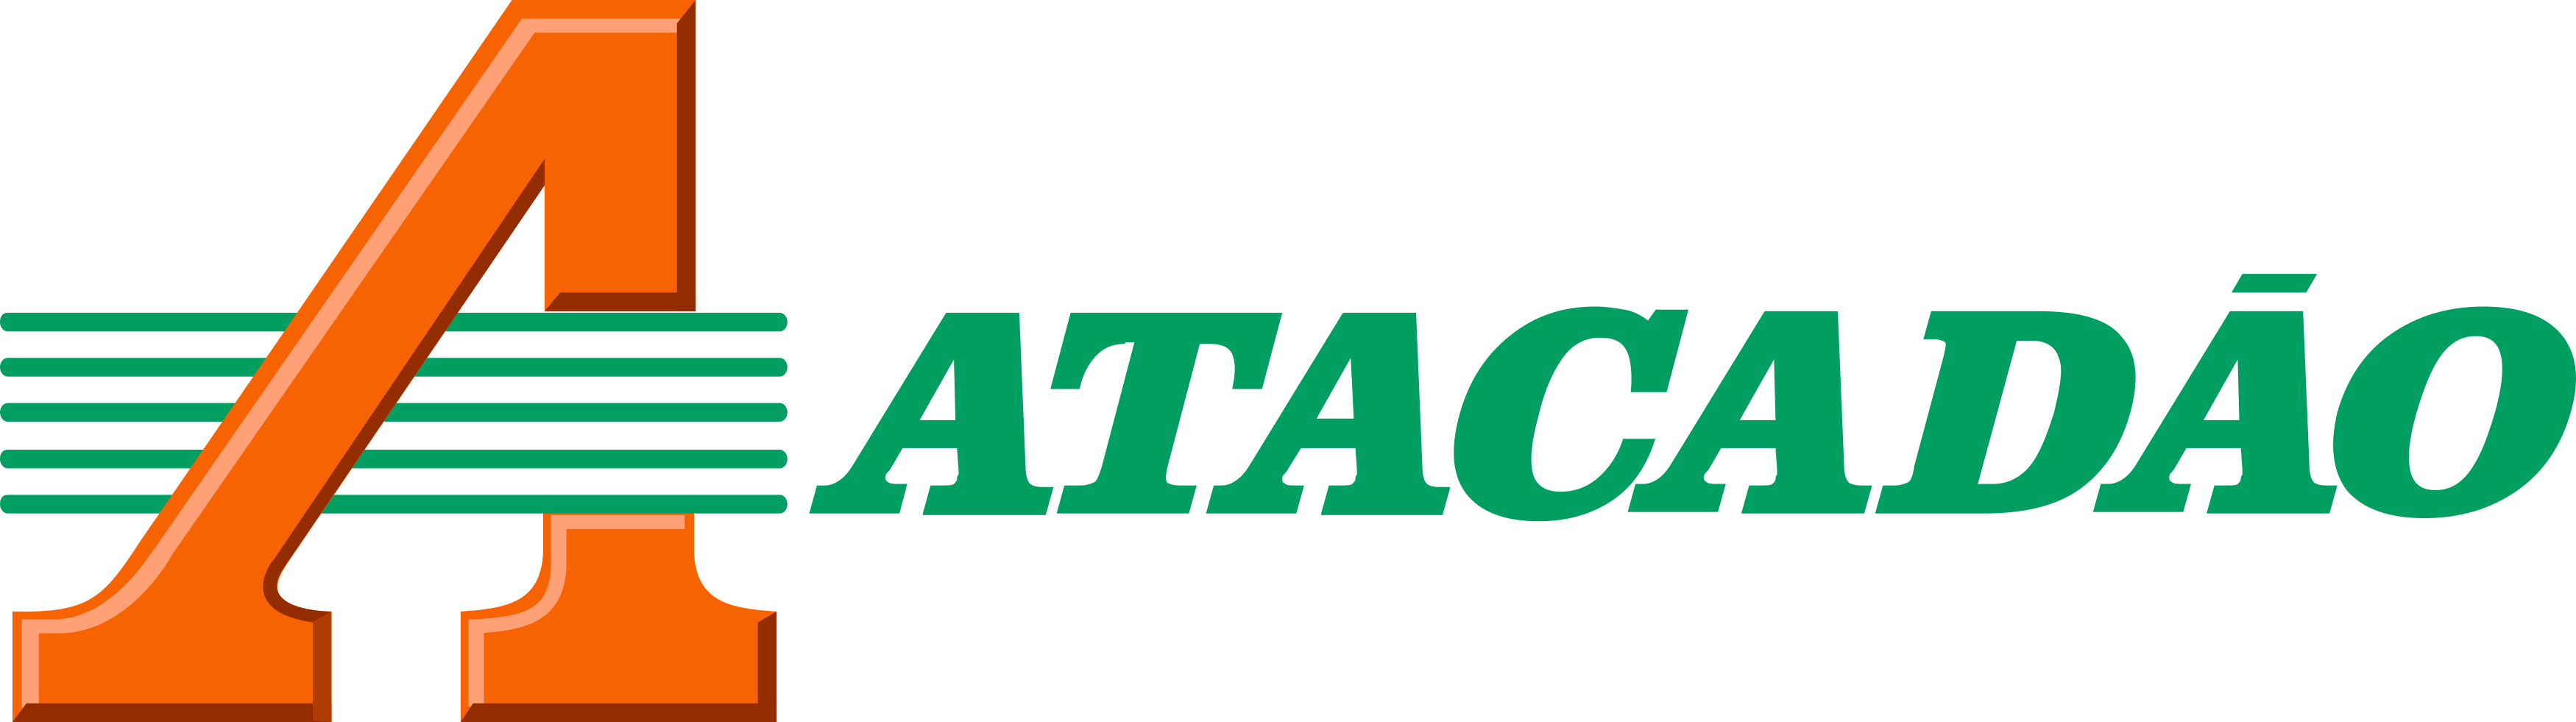 Logotipo da empresa ATACADÃO